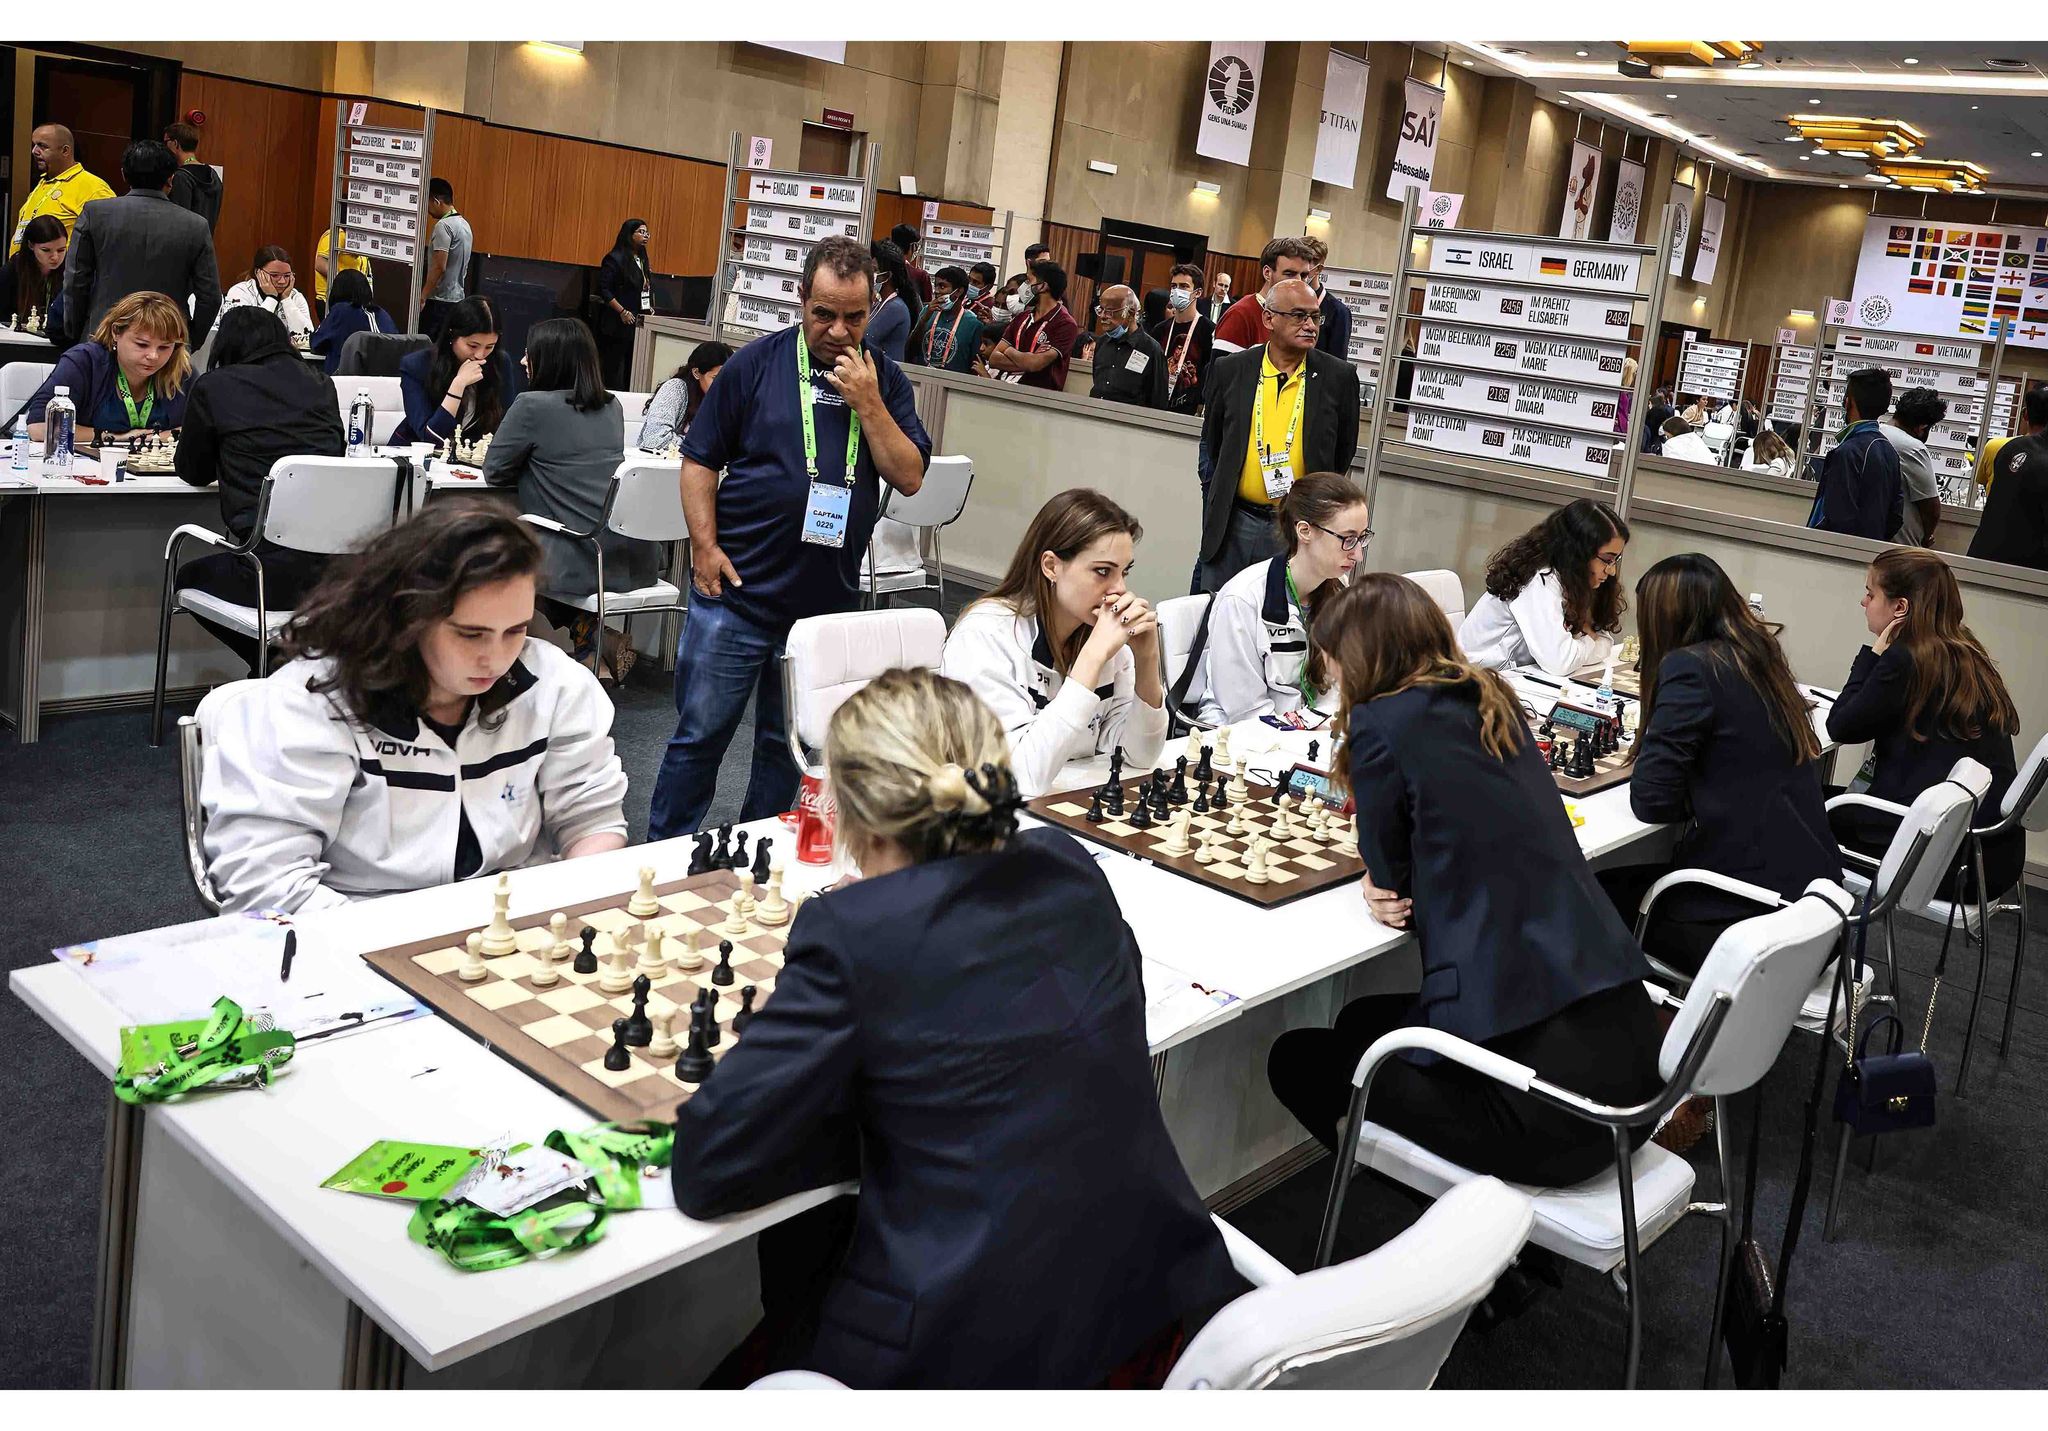 WGM Dina Belenkaya: “First days at the Olympiad were difficult” – Chessdom